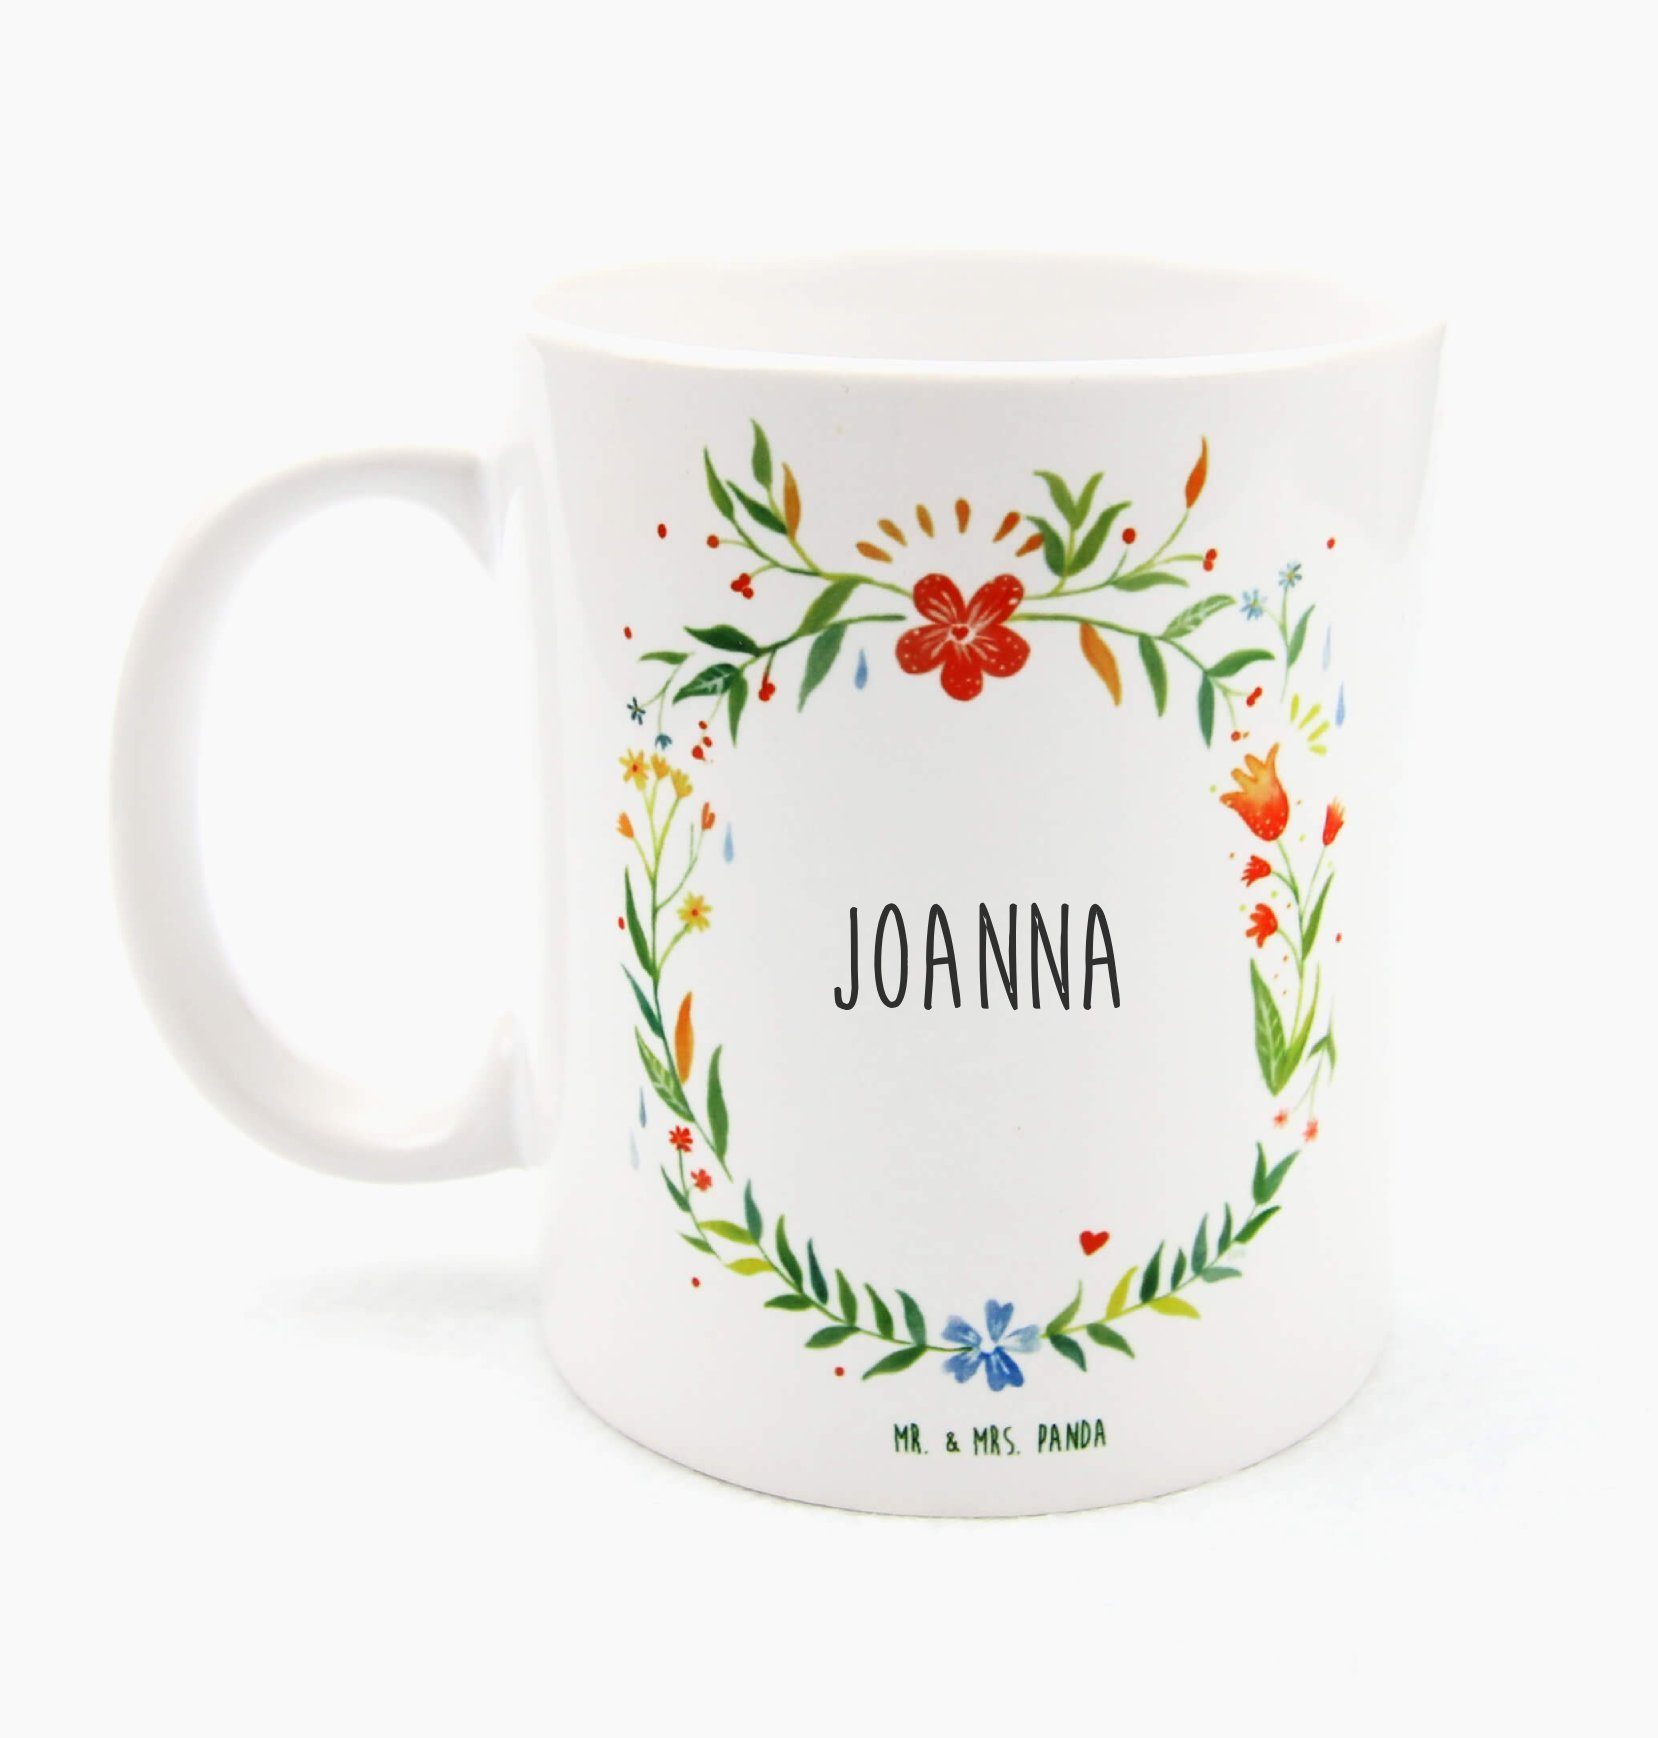 Mr. & Mrs. Panda Tasse Joanna - Geschenk, Büro Tasse, Kaffeetasse, Kaffeebecher, Tasse, Tass, Keramik